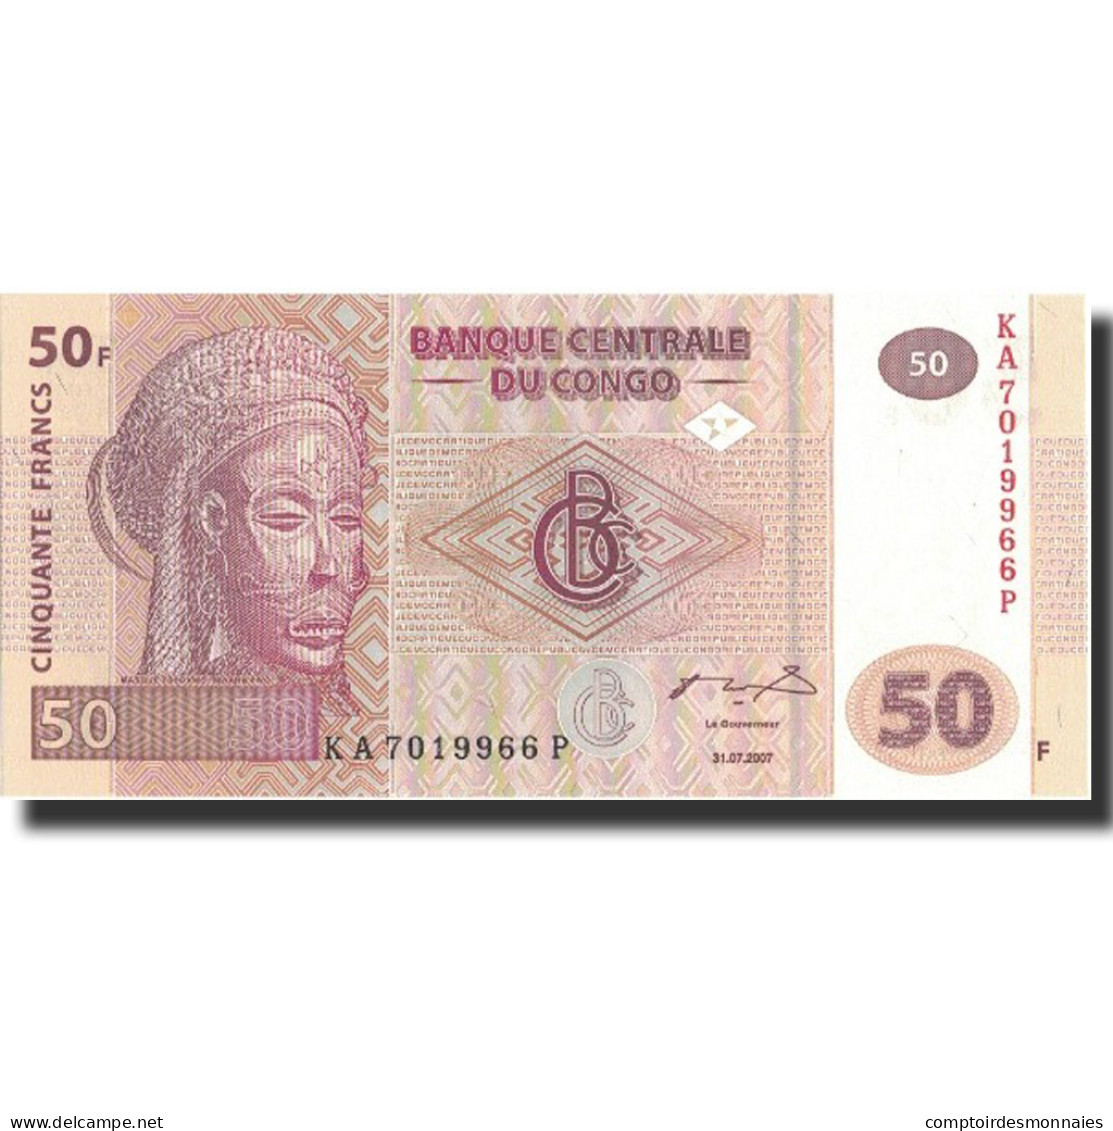 Billet, Congo Democratic Republic, 50 Francs, 2007, 2007-07-31, KM:97a, NEUF - Republic Of Congo (Congo-Brazzaville)